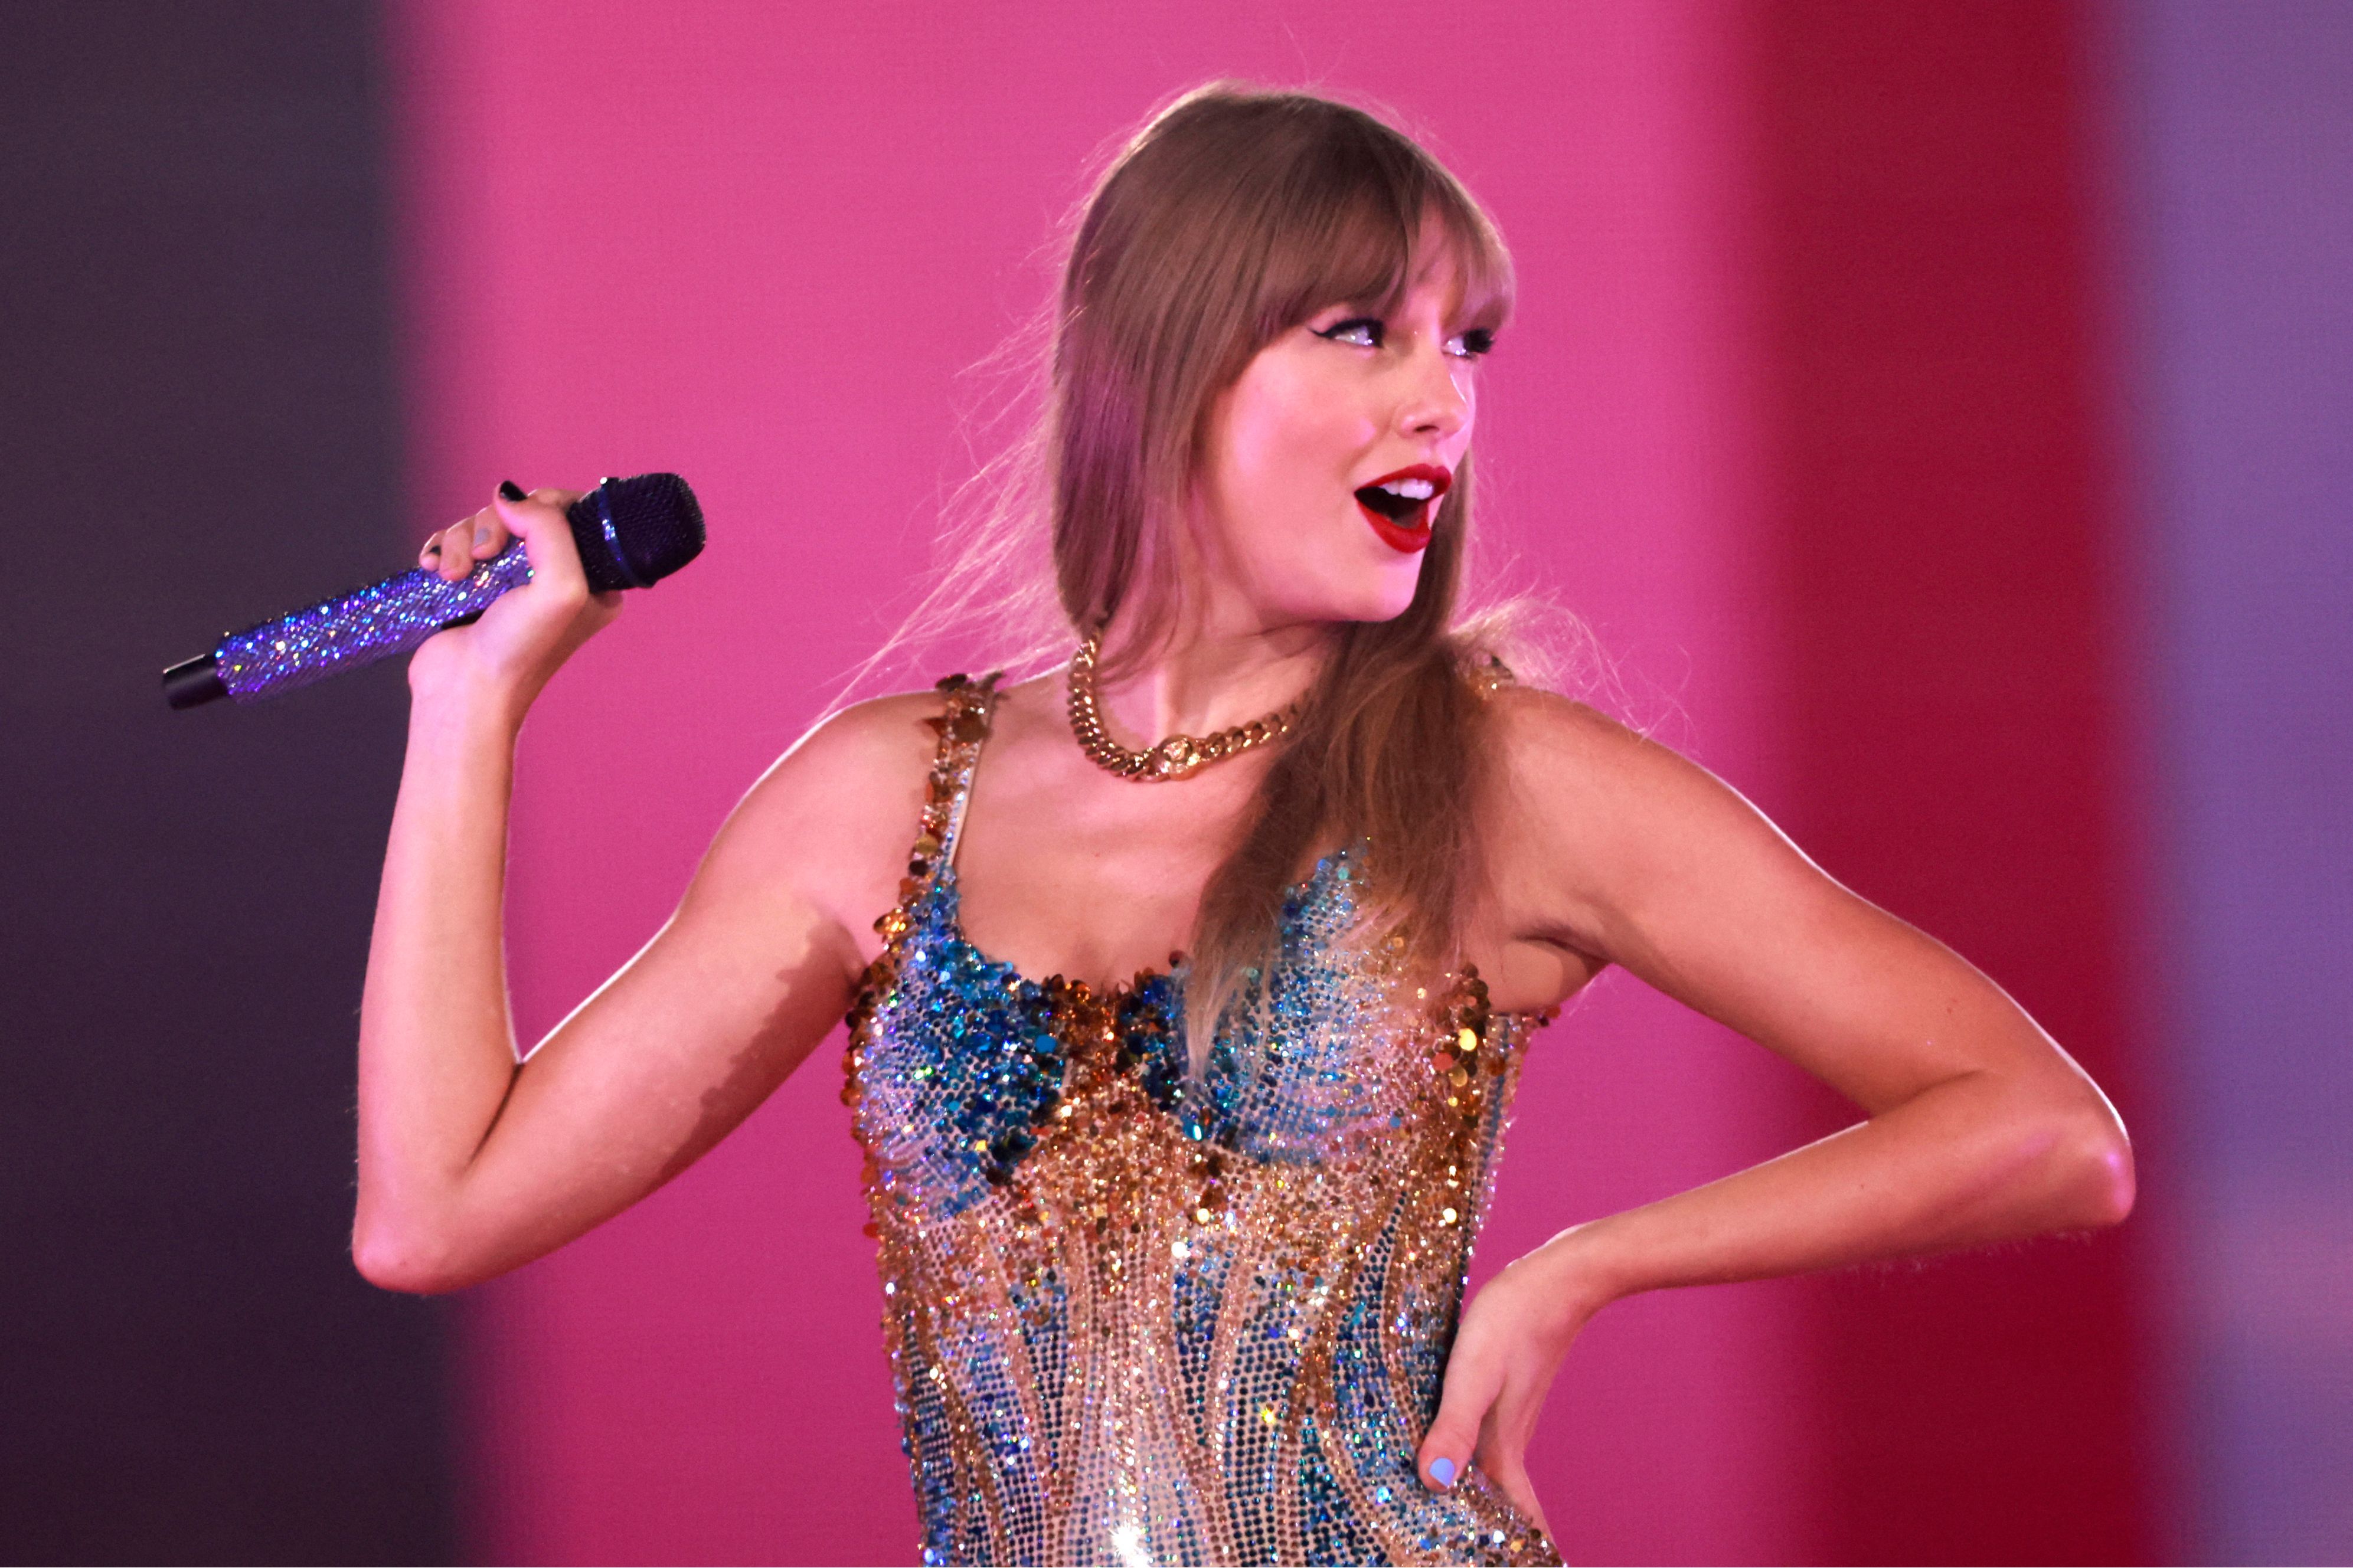 Taylor Swift ~ End Game ~ Reputation Tour Studio Karaoke 